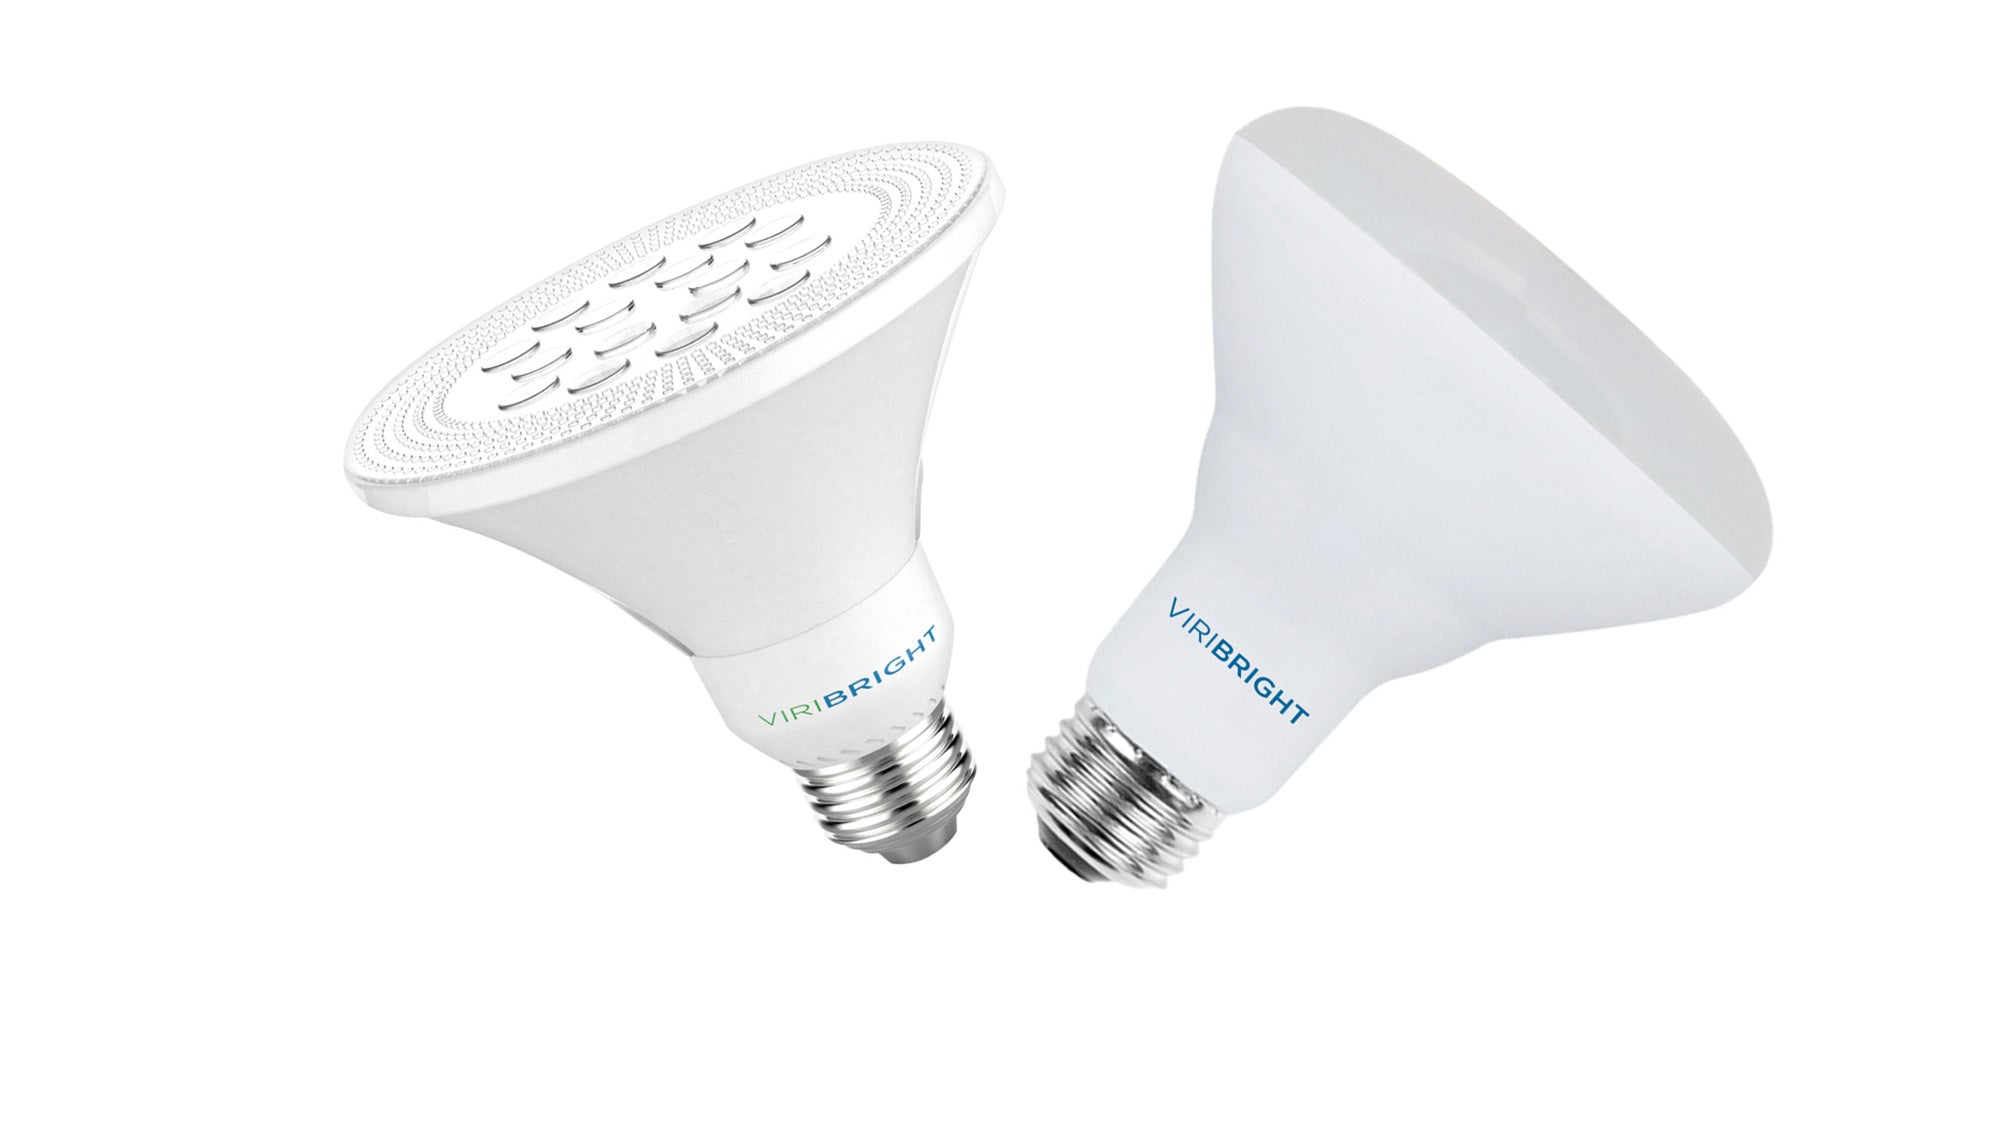 LED Flood Light Bulbs - Viribright